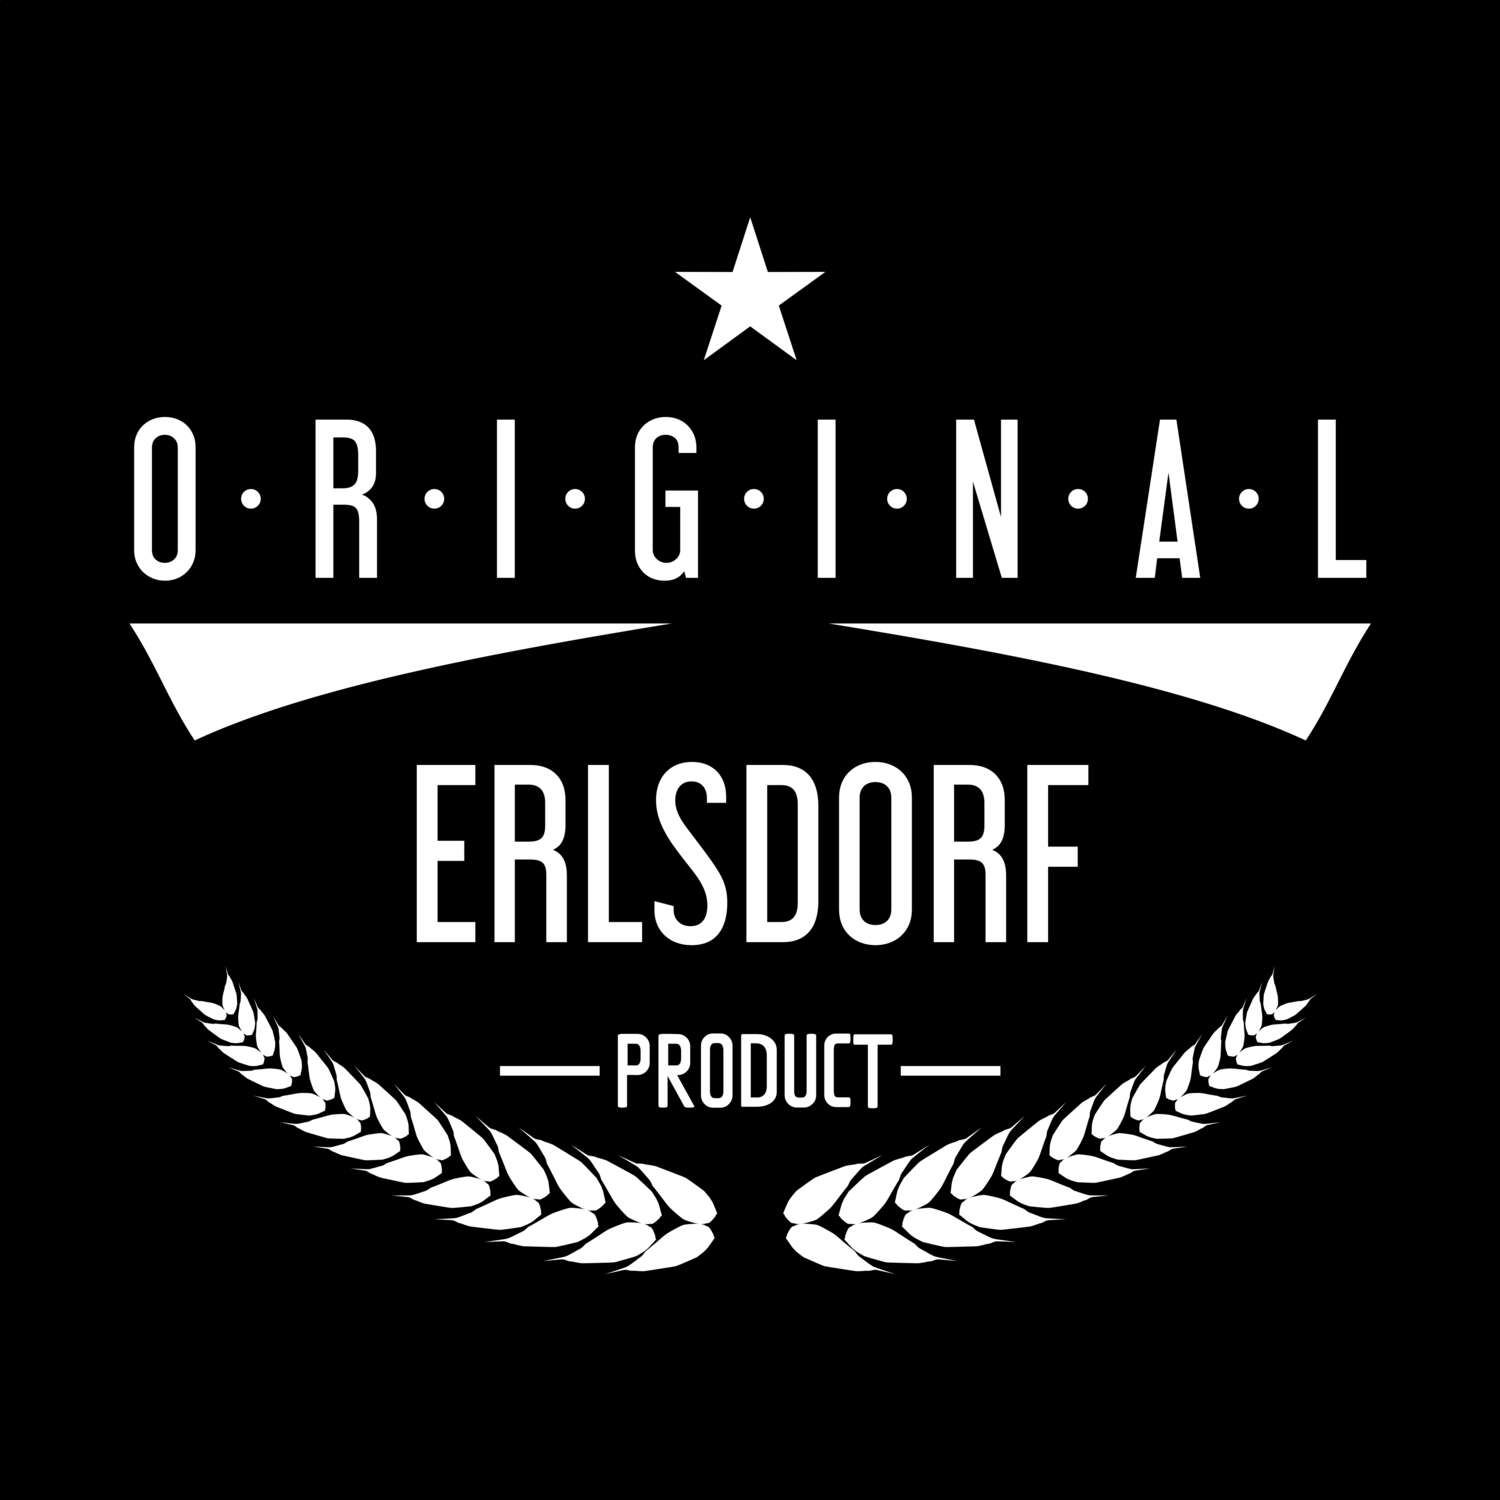 Erlsdorf T-Shirt »Original Product«